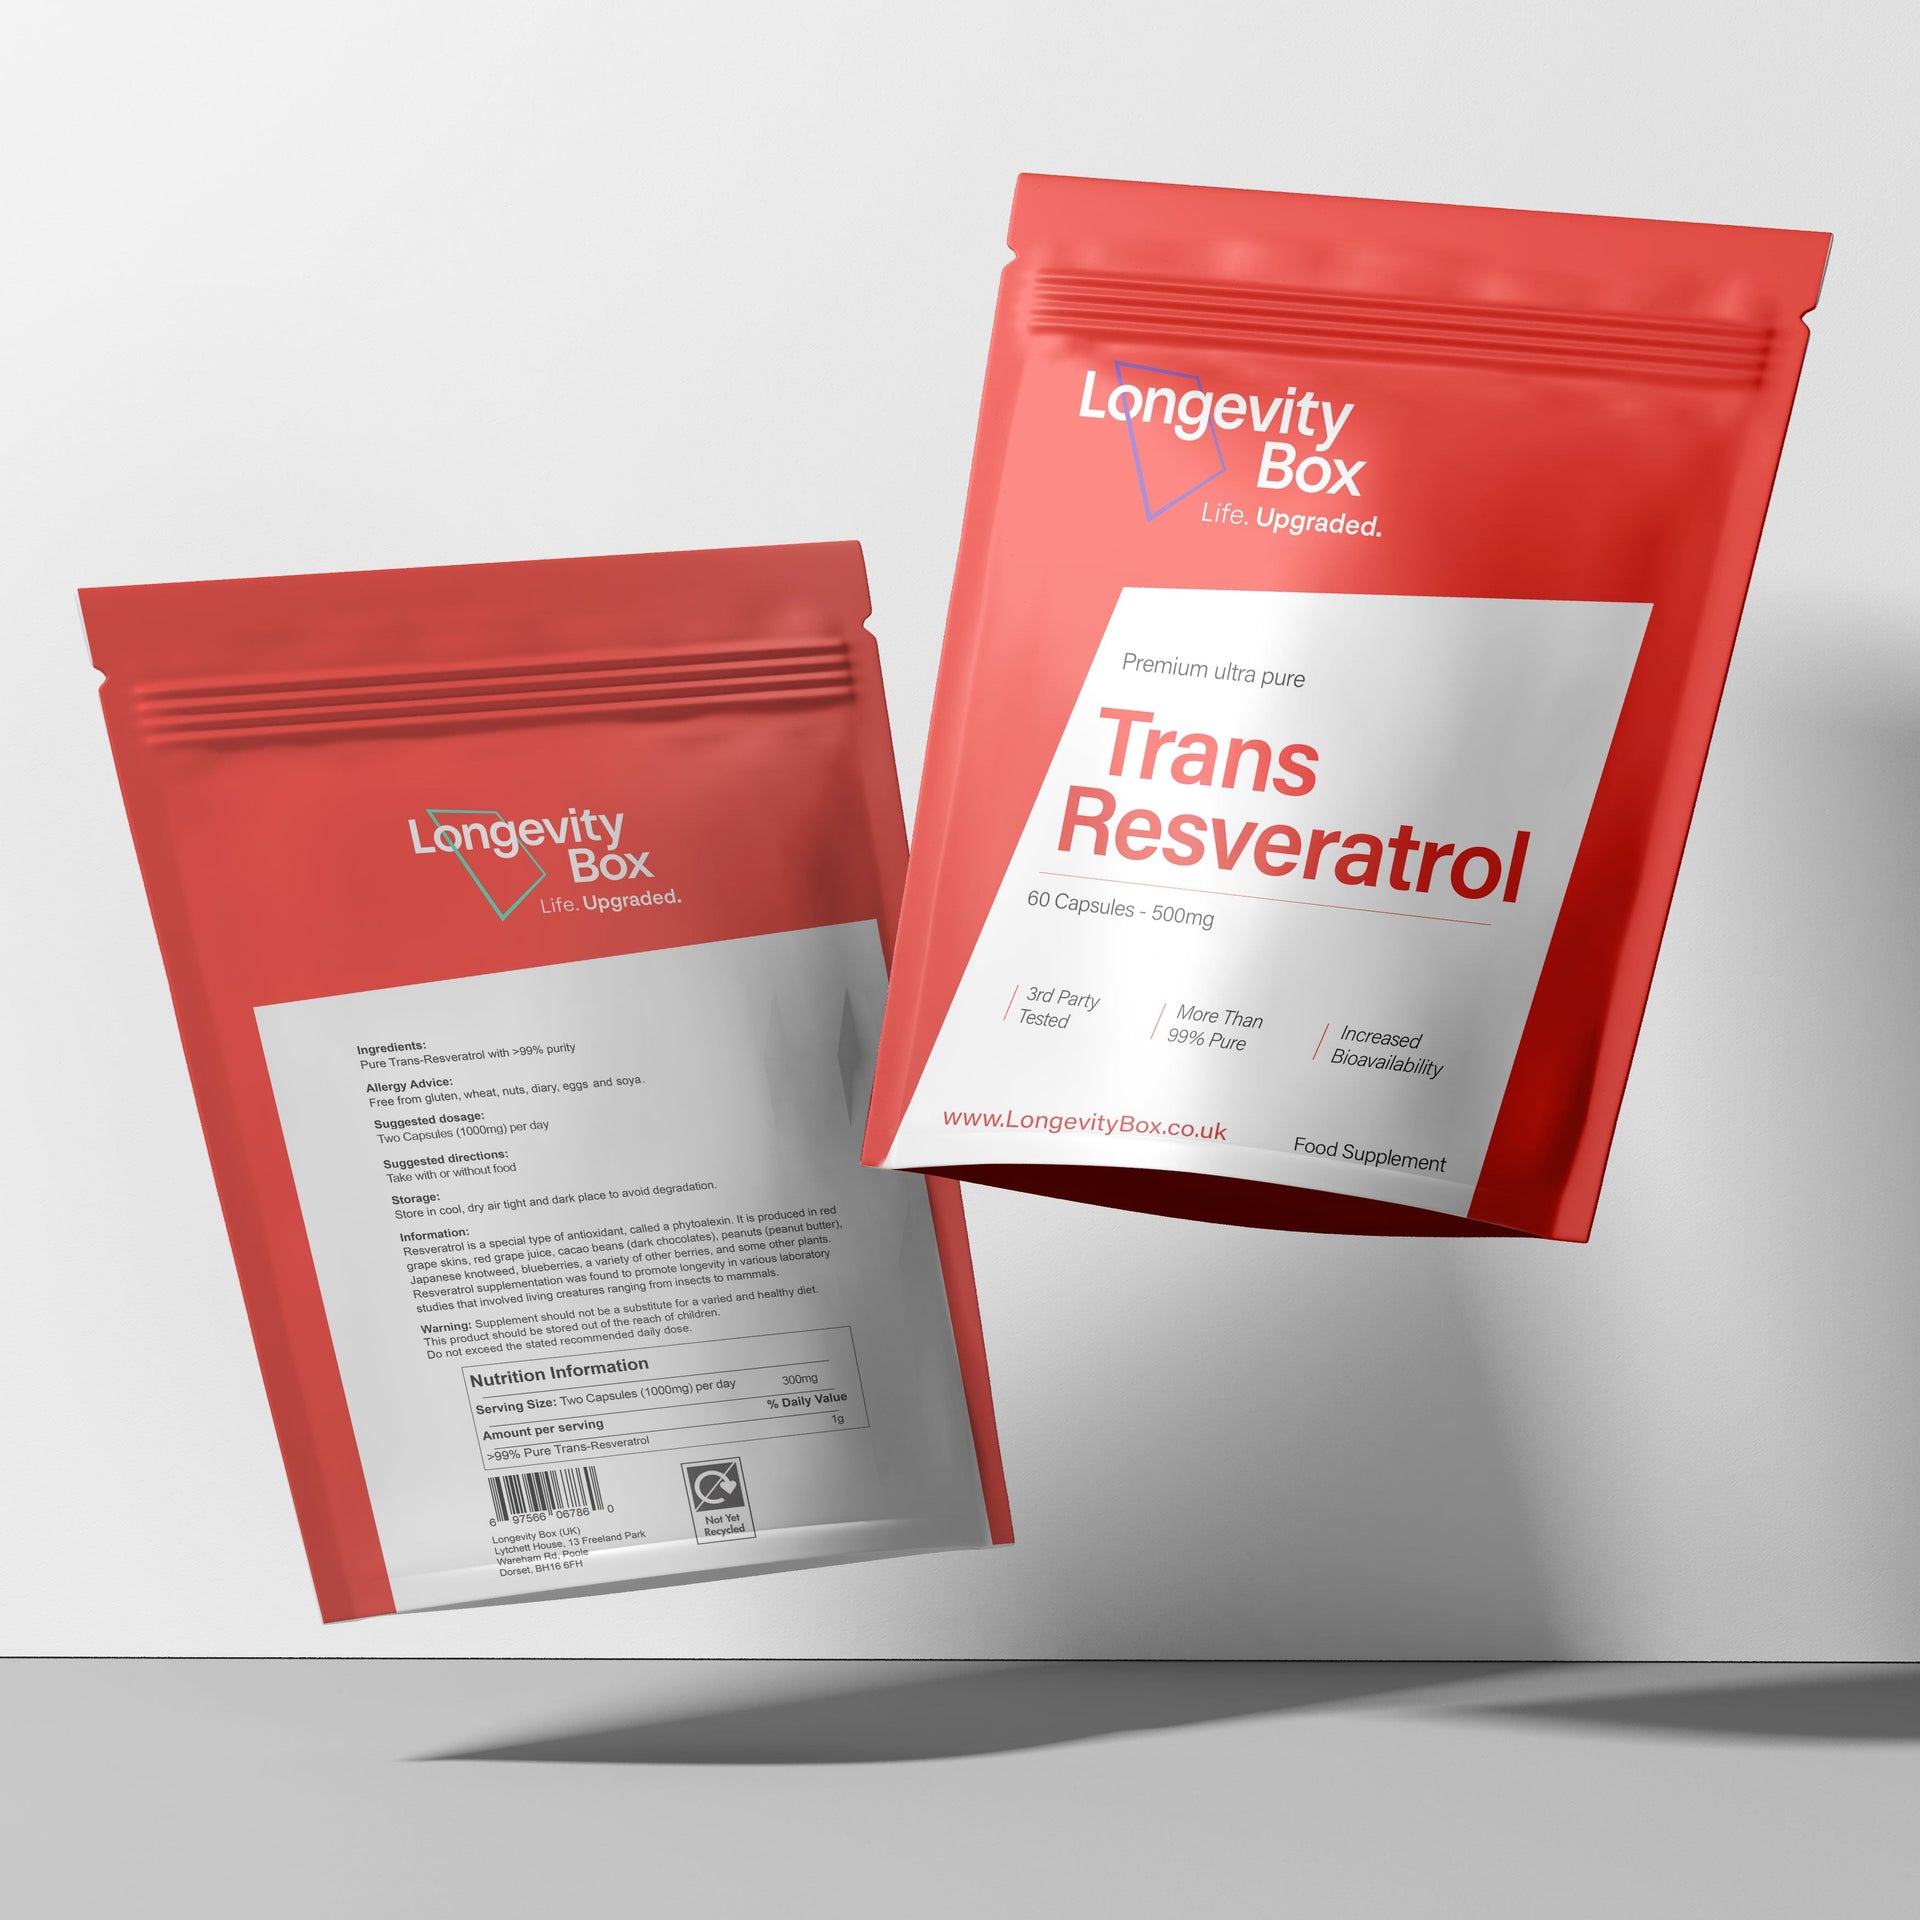 Pure Trans Resveratrol - Longevity Box